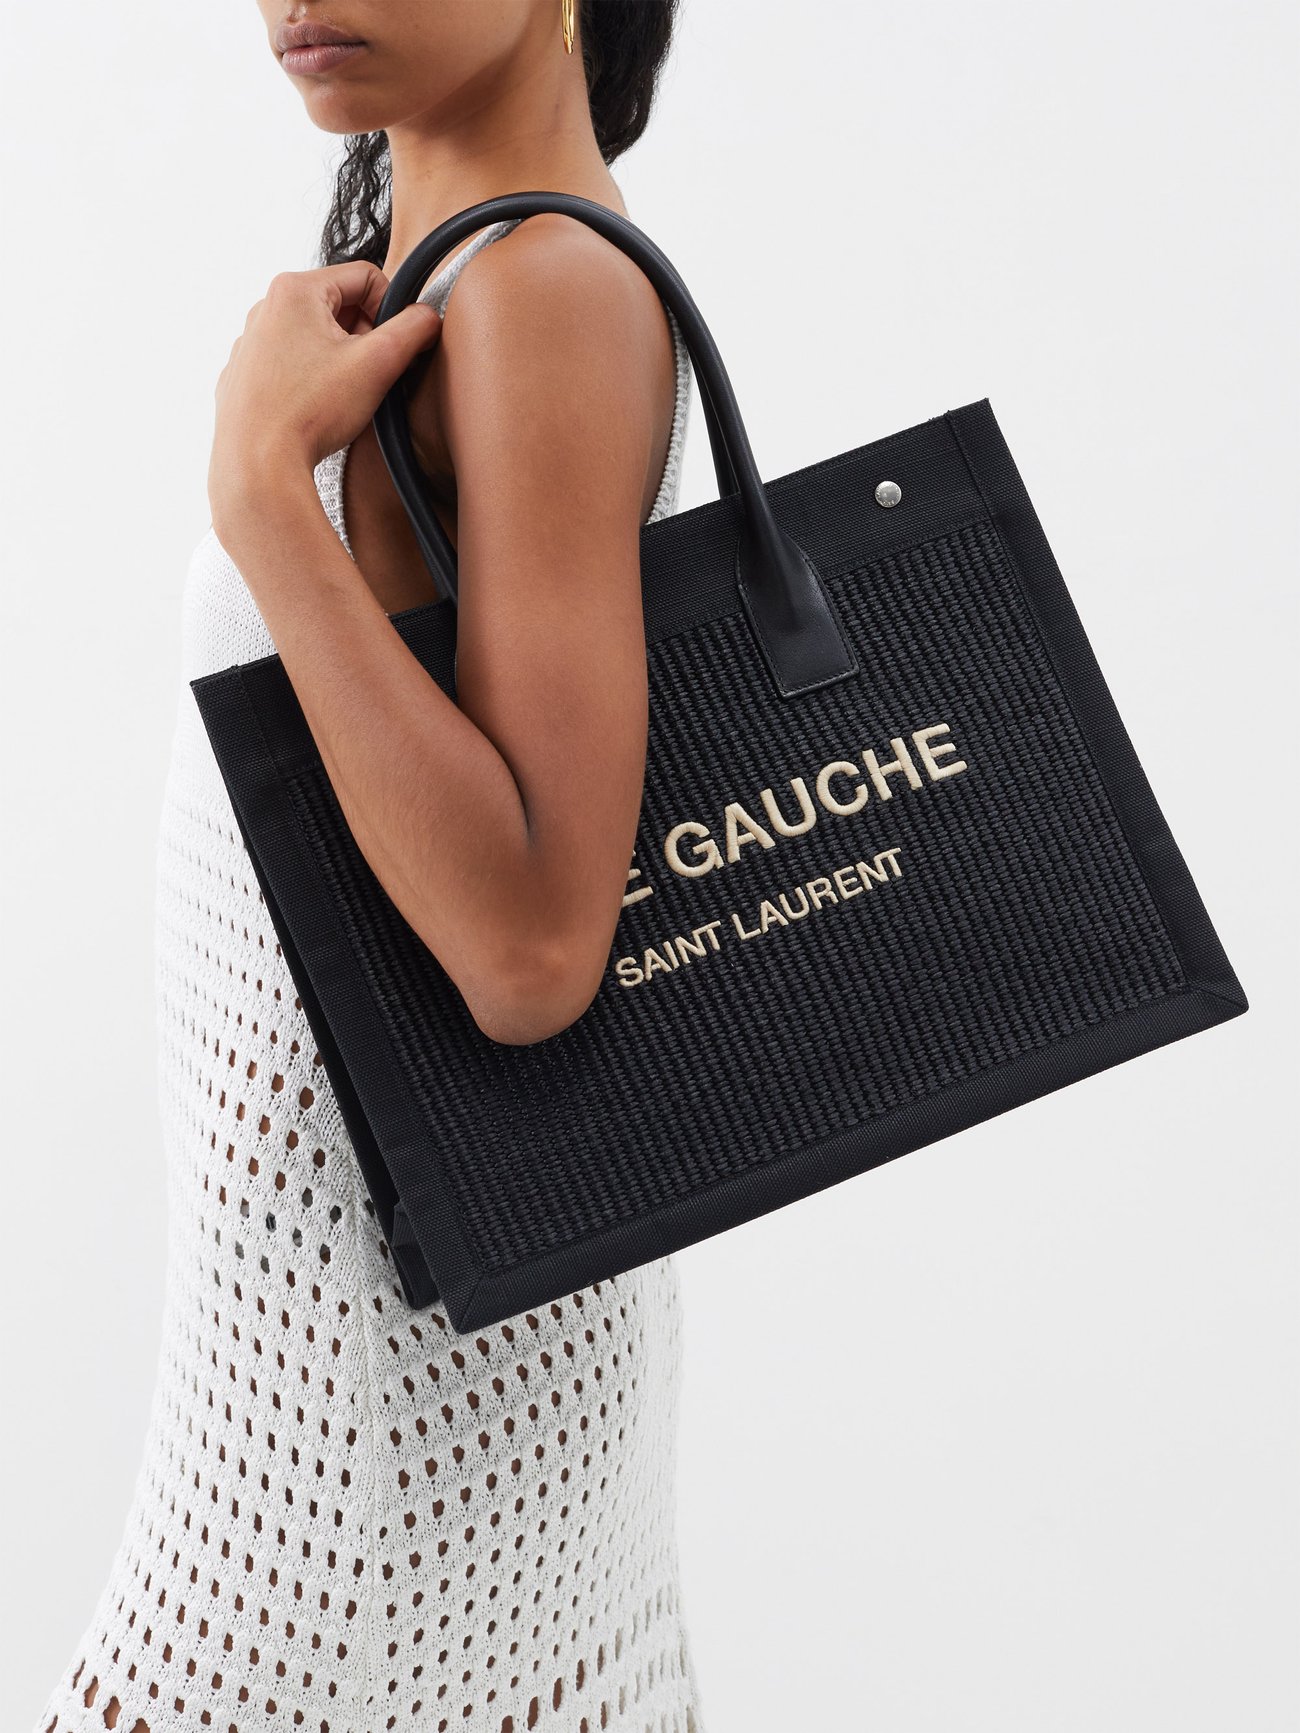 Rive gauche raffia and leather tote bag - Saint Laurent